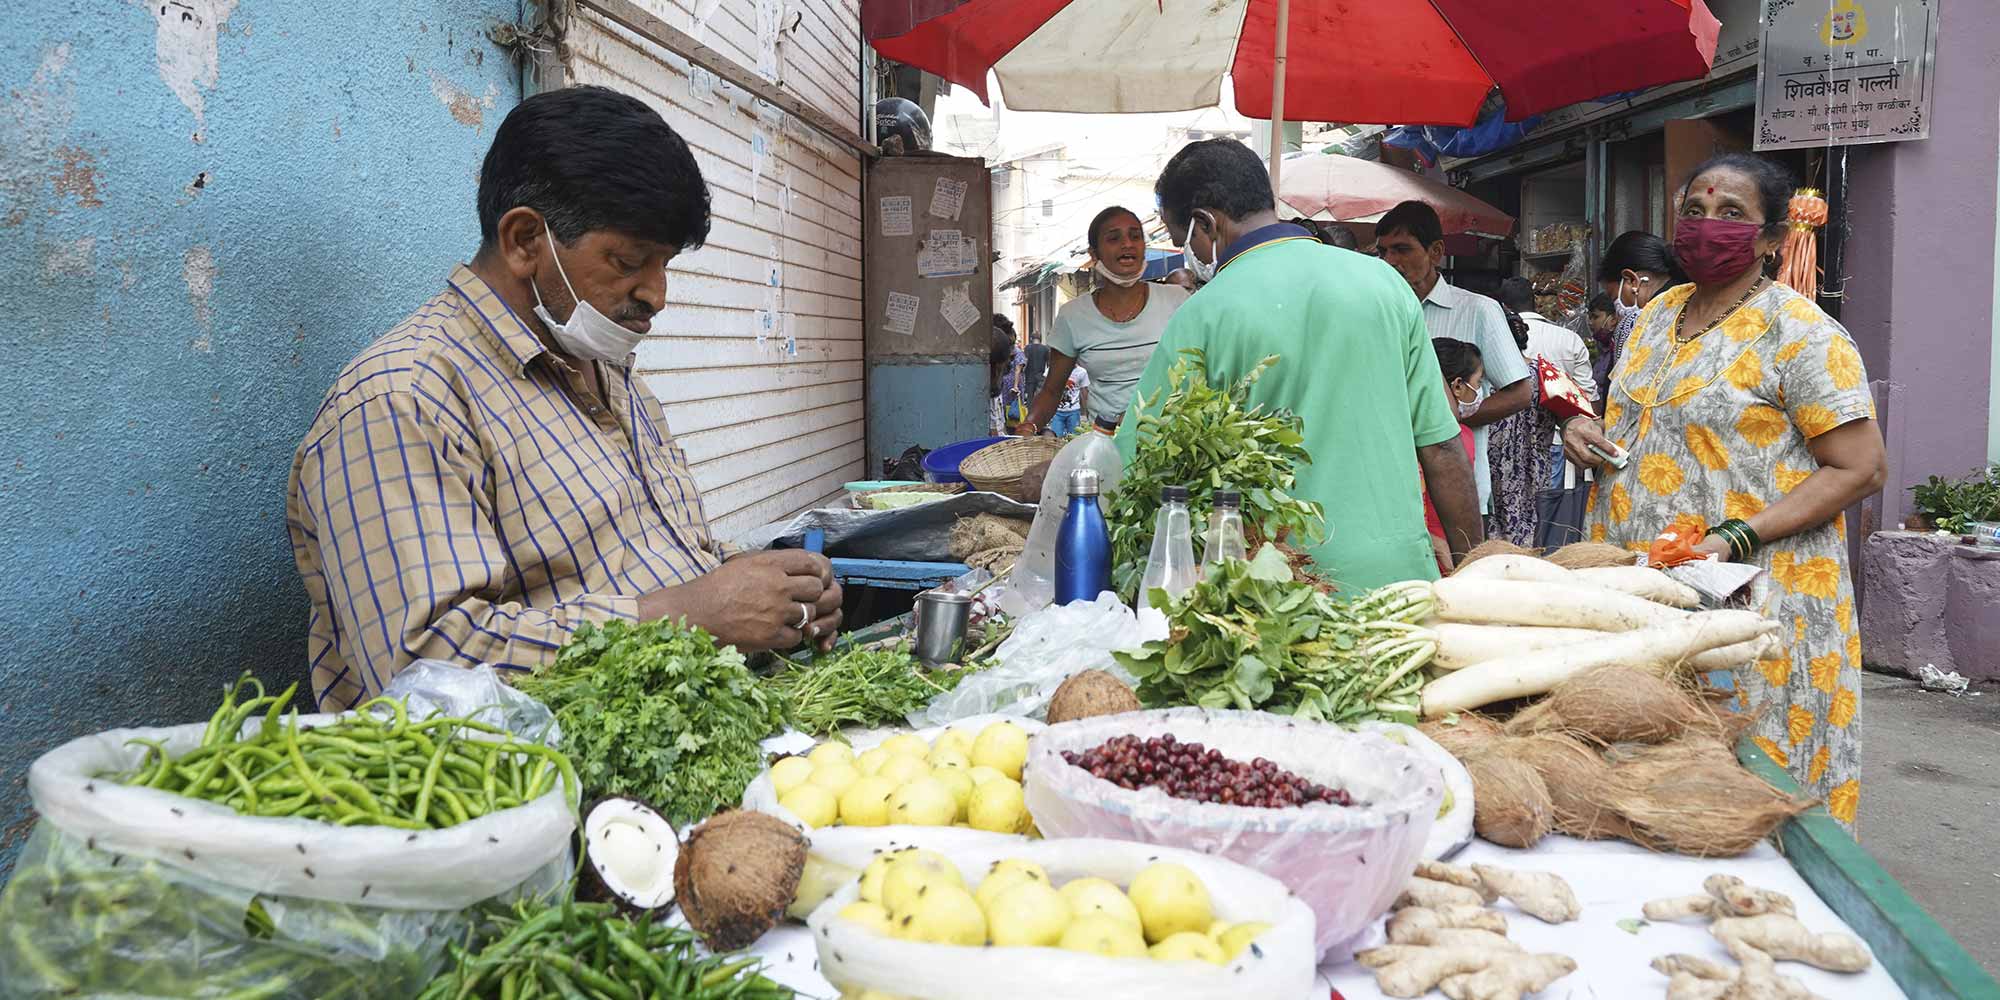 A street vendor selling vegetables on a local market in Mumbai. – Gavi/Mumbai